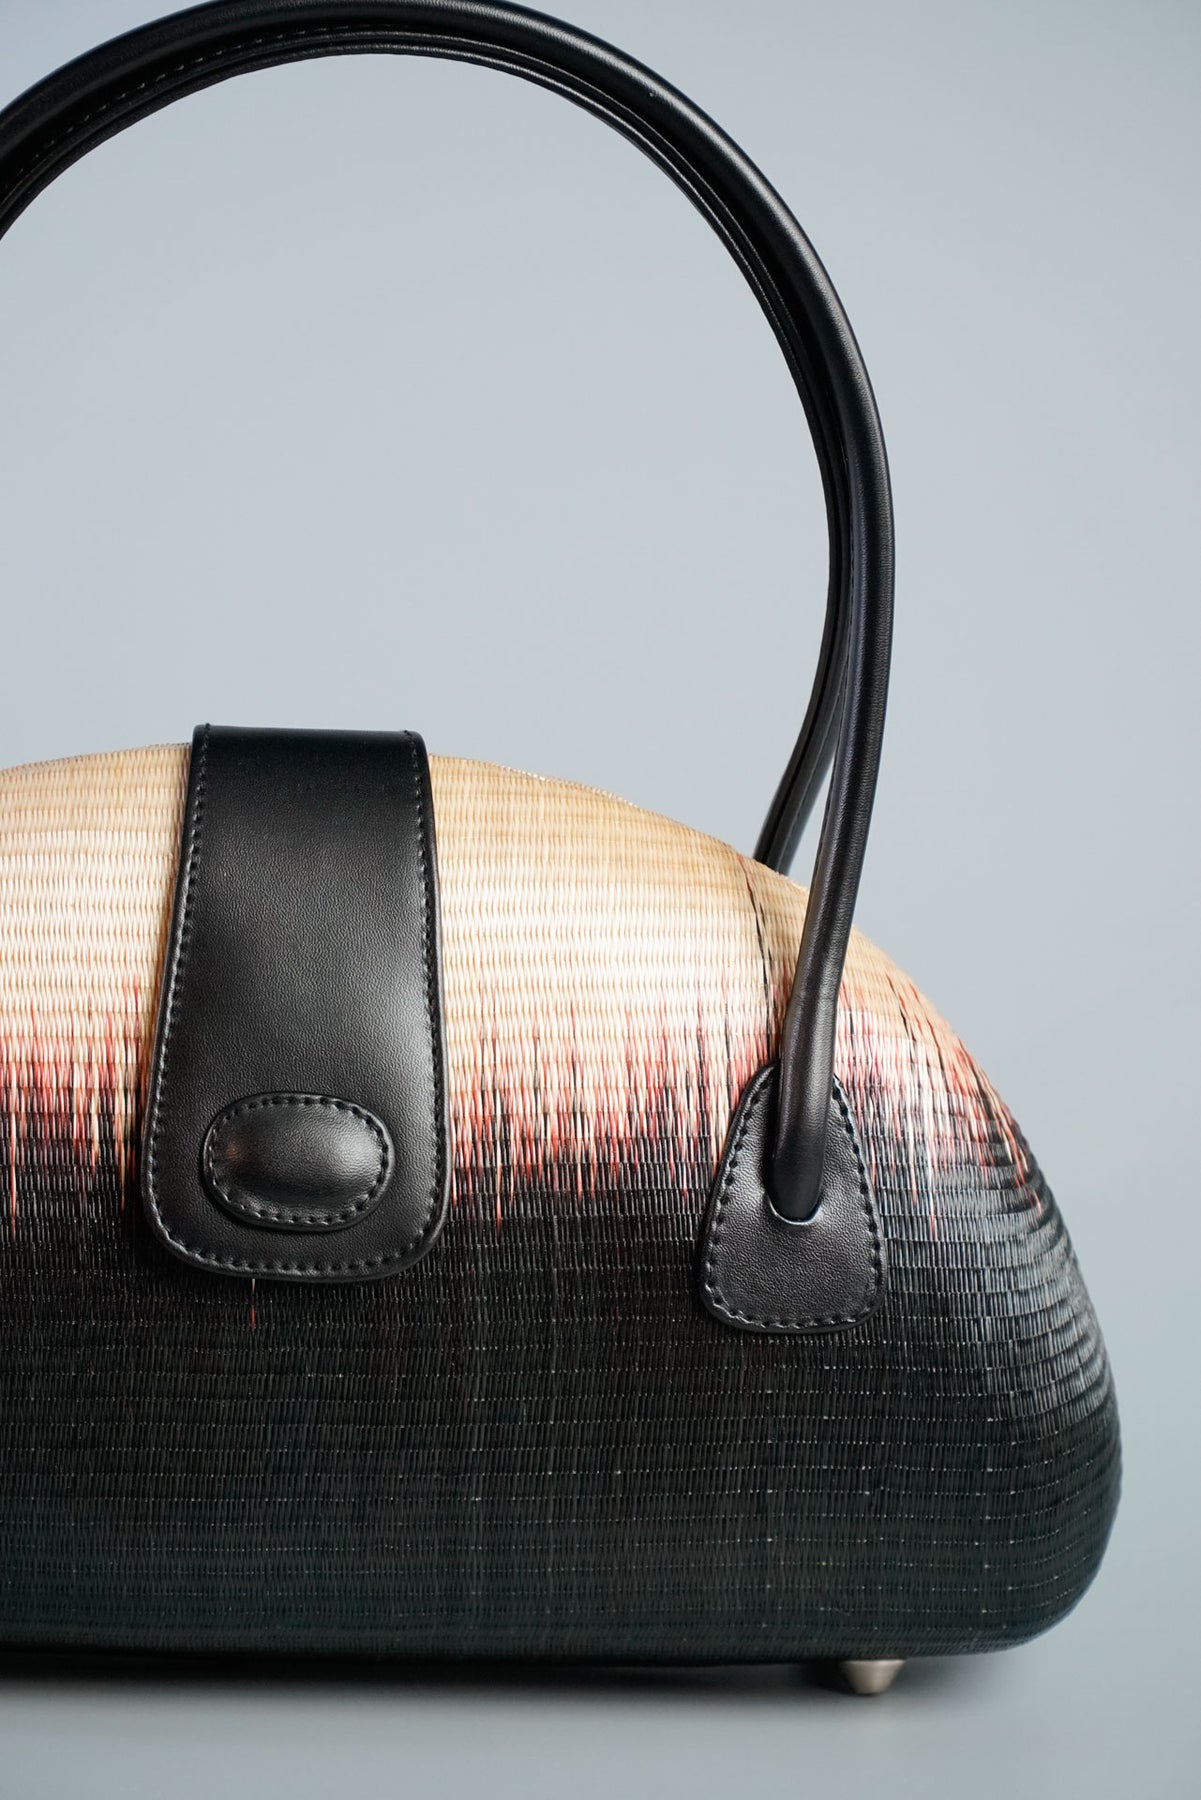 Oval Buntal Handbag with Leather Strap and Clasp, Kultura Filipino –  Kultura Filipino